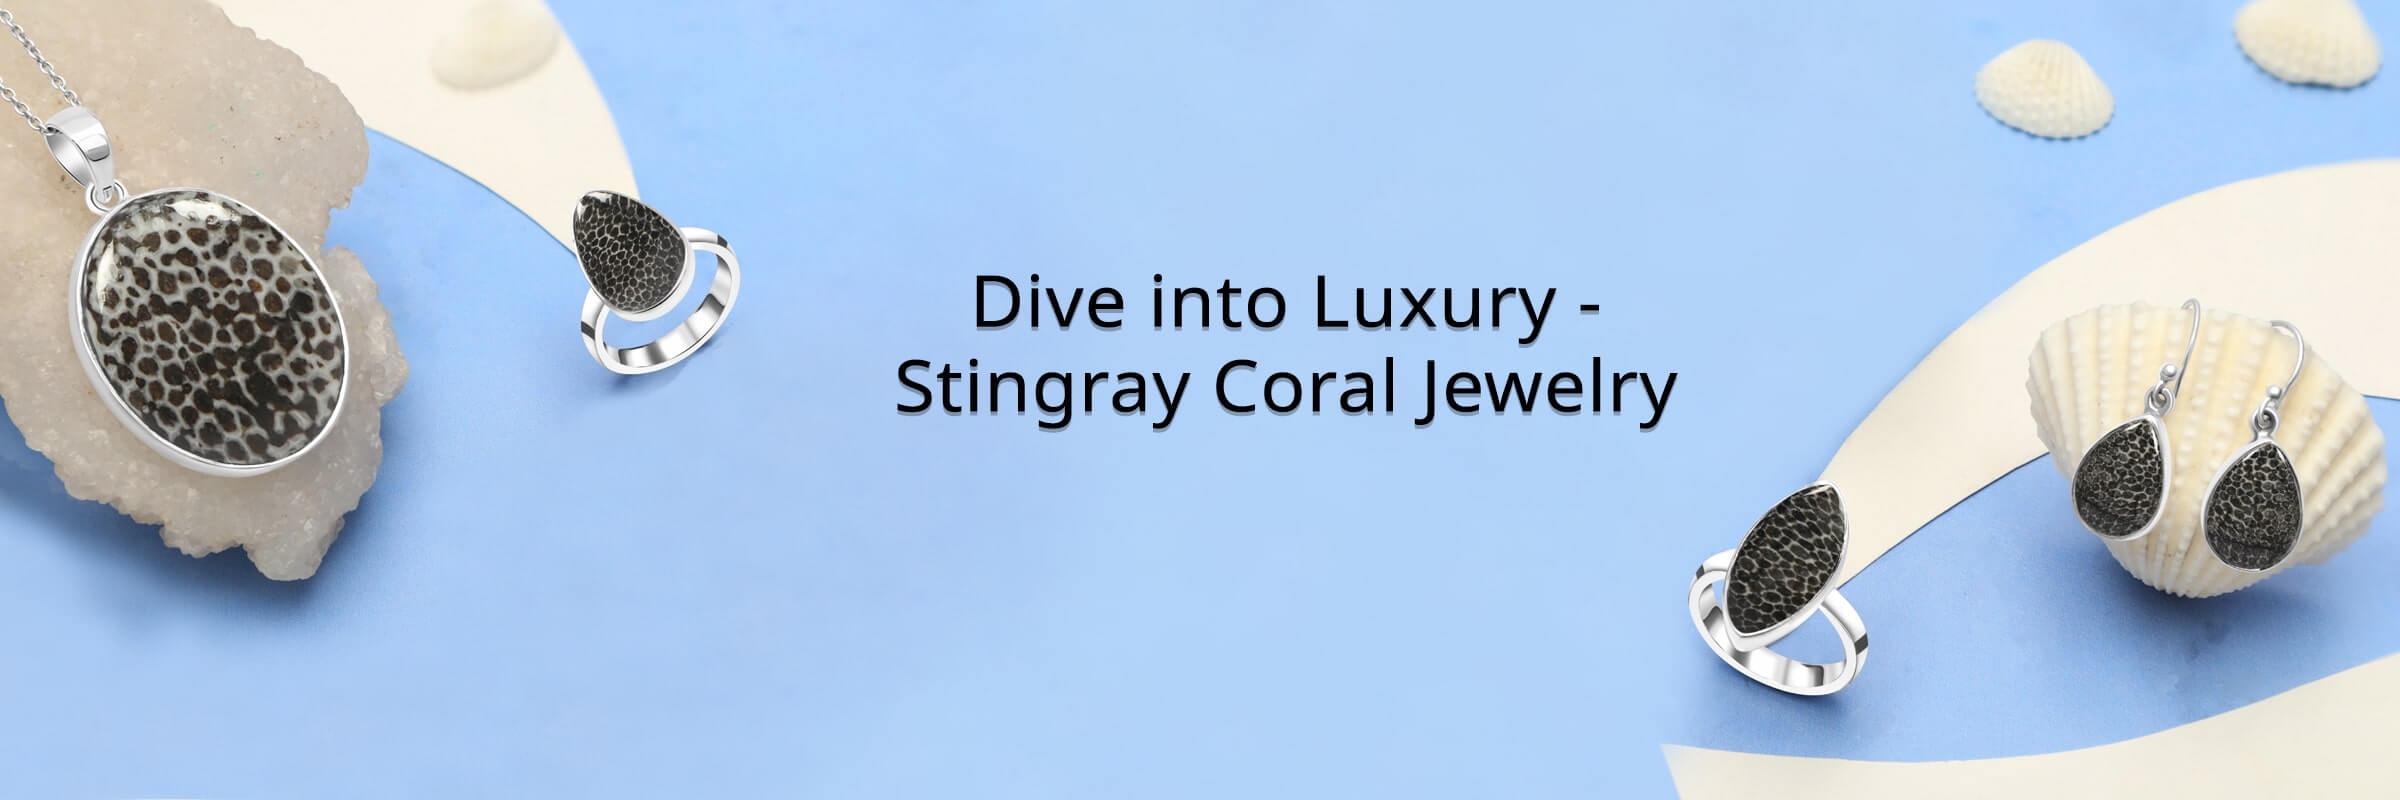 Stingray Coral Jewelry